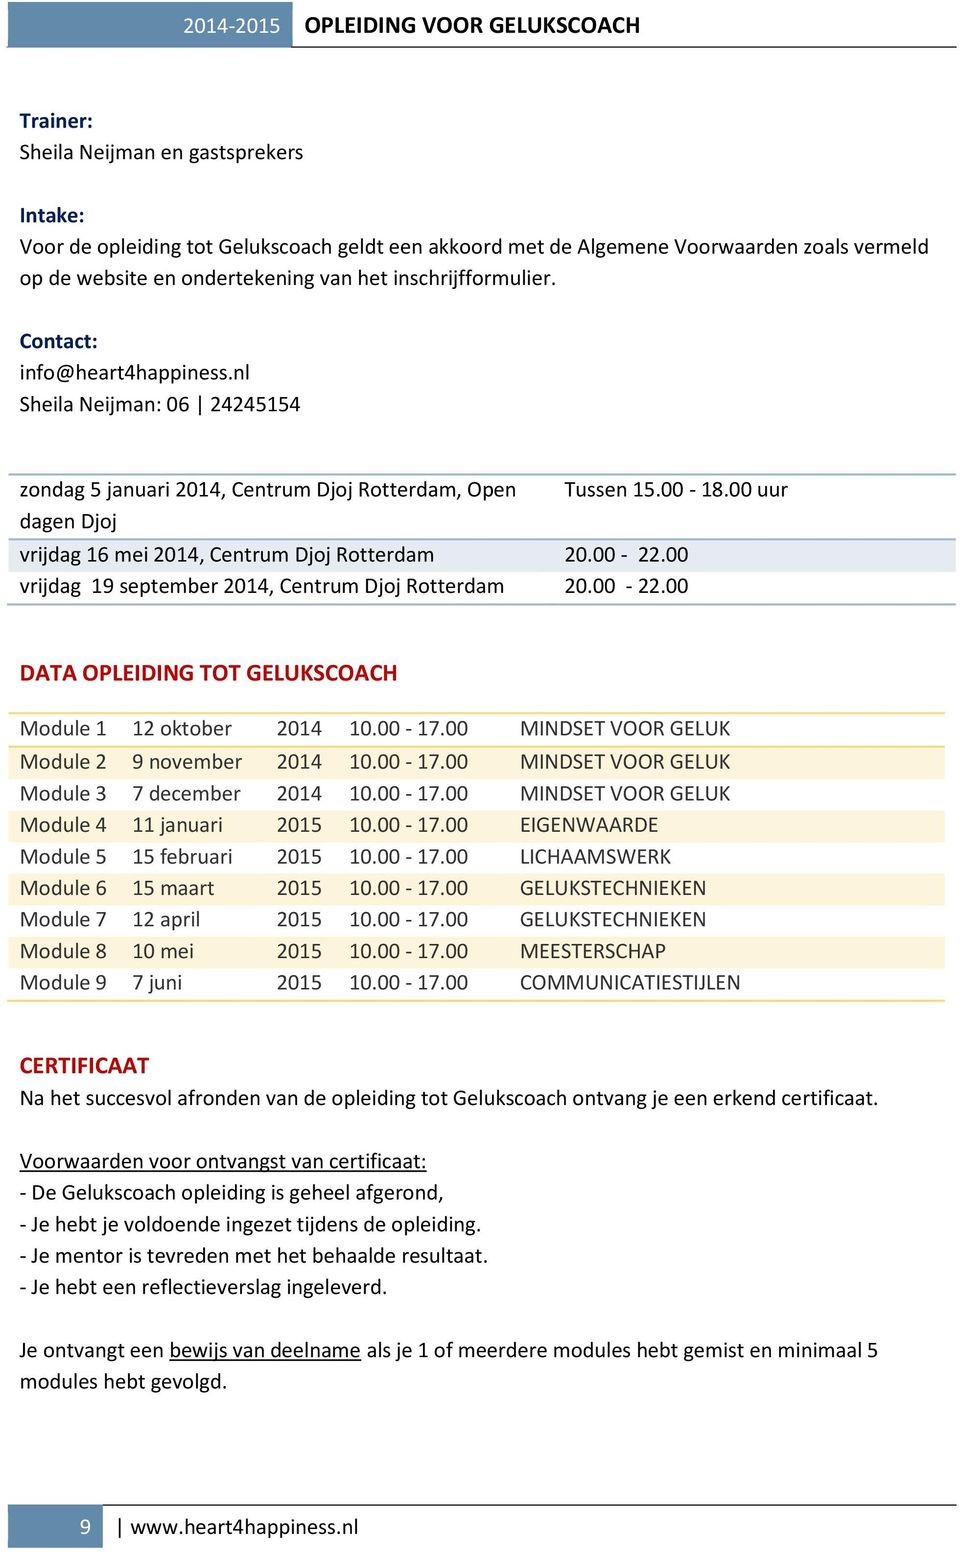 00 vrijdag 19 september 2014, Centrum Djoj Rotterdam 20.00-22.00 DATA OPLEIDING TOT GELUKSCOACH Module 1 12 oktober 2014 10.00-17.00 MINDSET VOOR GELUK Module 2 9 november 2014 10.00-17.00 MINDSET VOOR GELUK Module 3 7 december 2014 10.